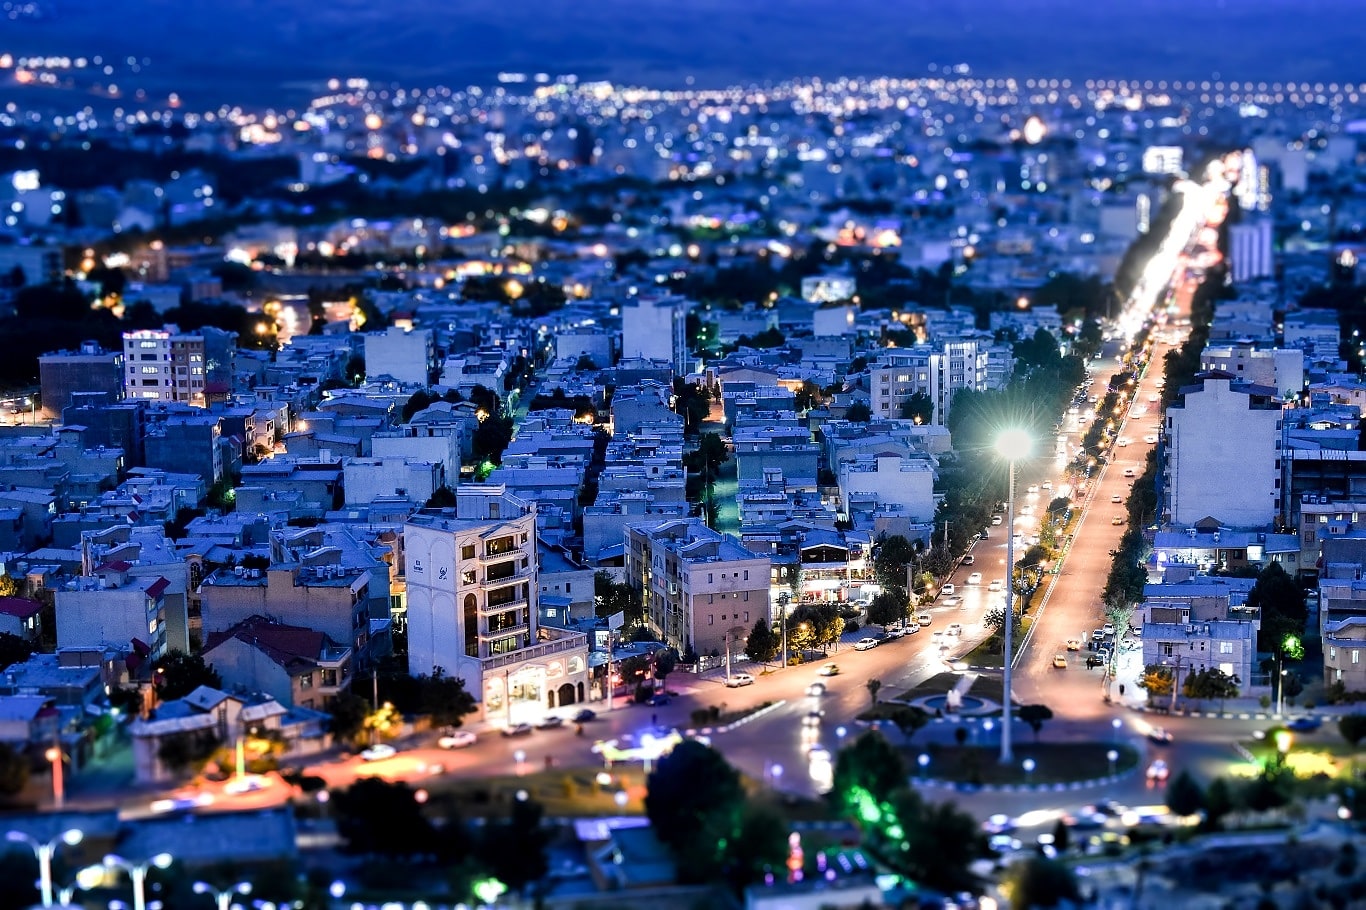 Borujerd, Iran